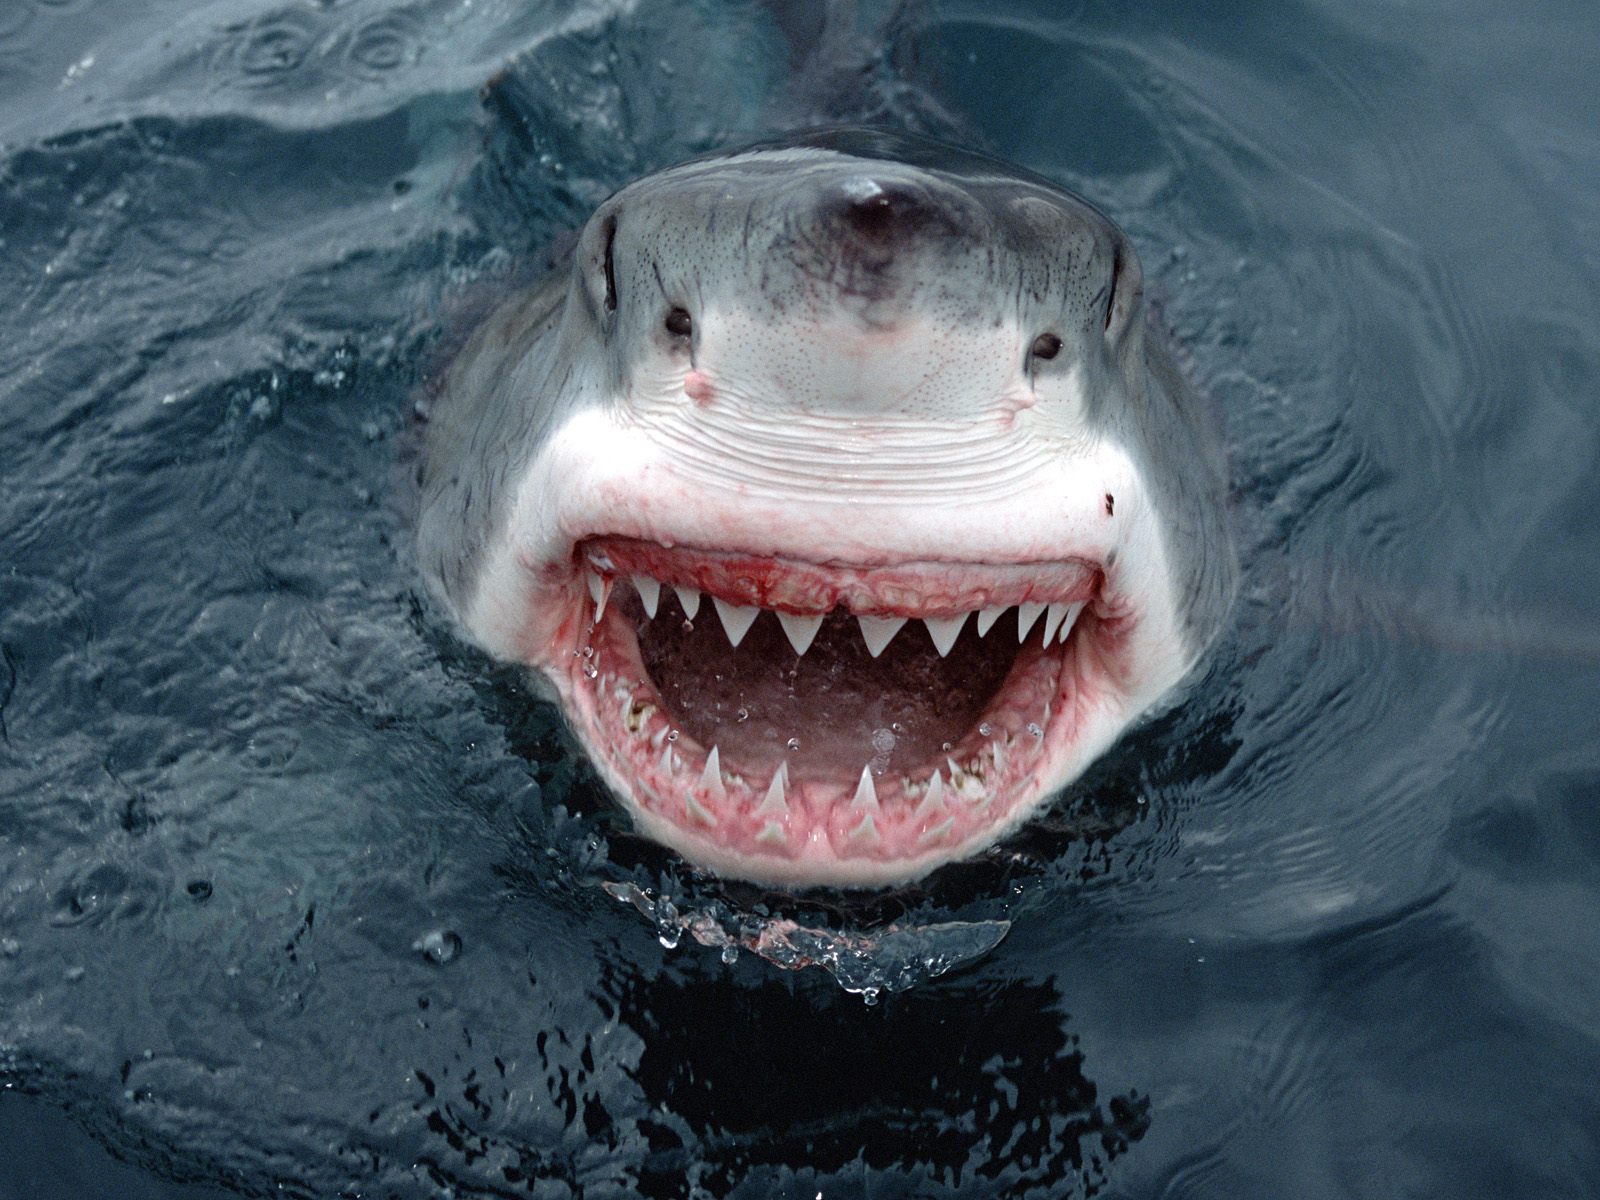 How Many Teeth Do Sharks Have?